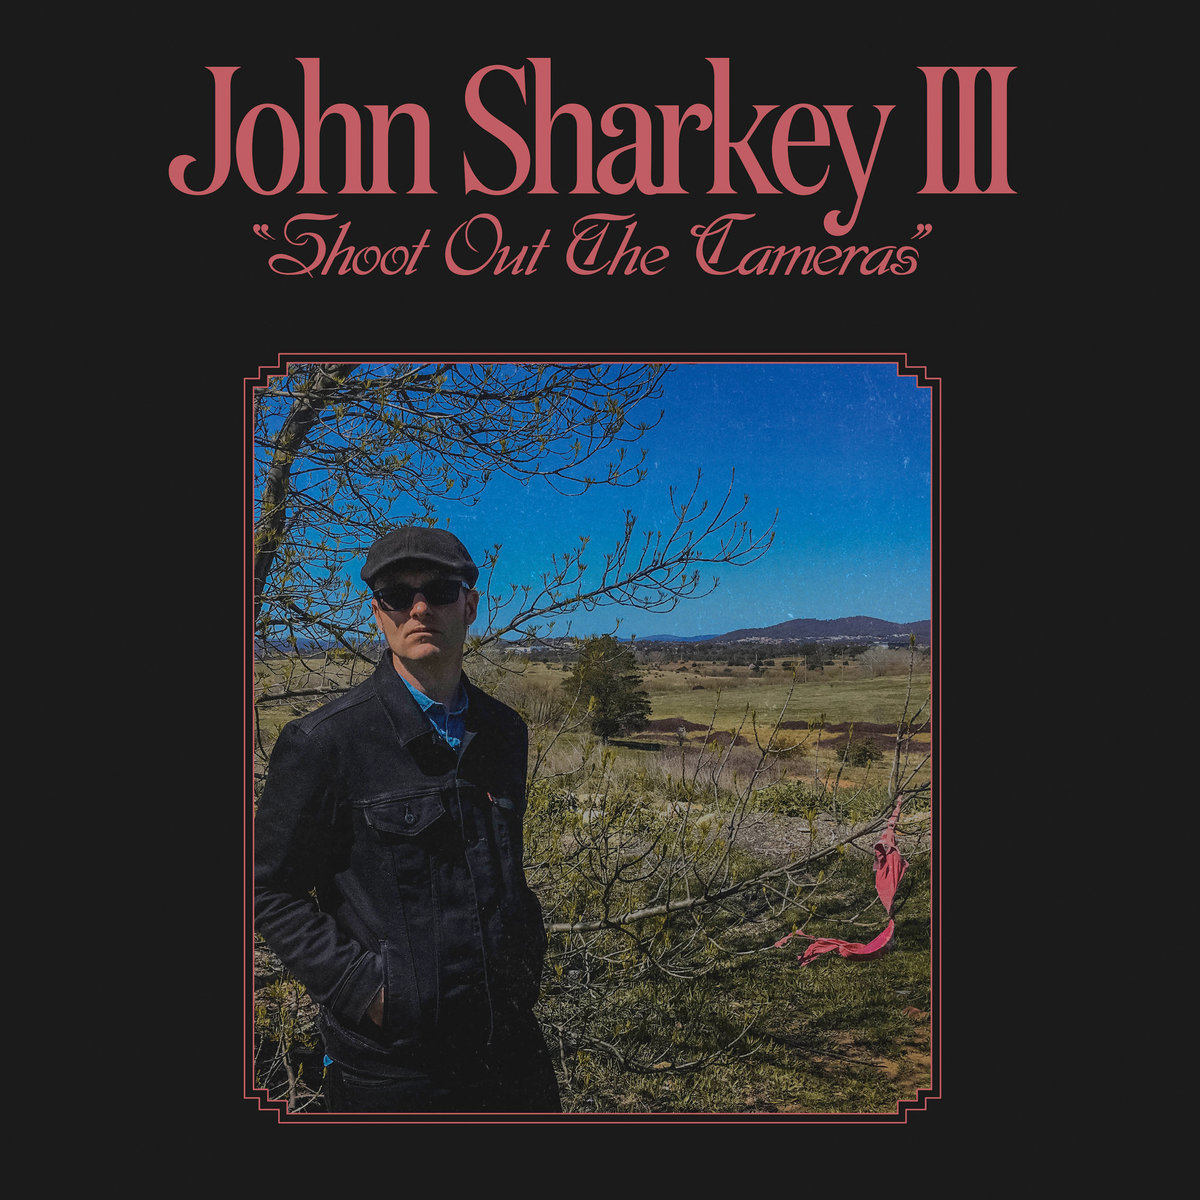 John Sharkey III – Shoot out the cameras